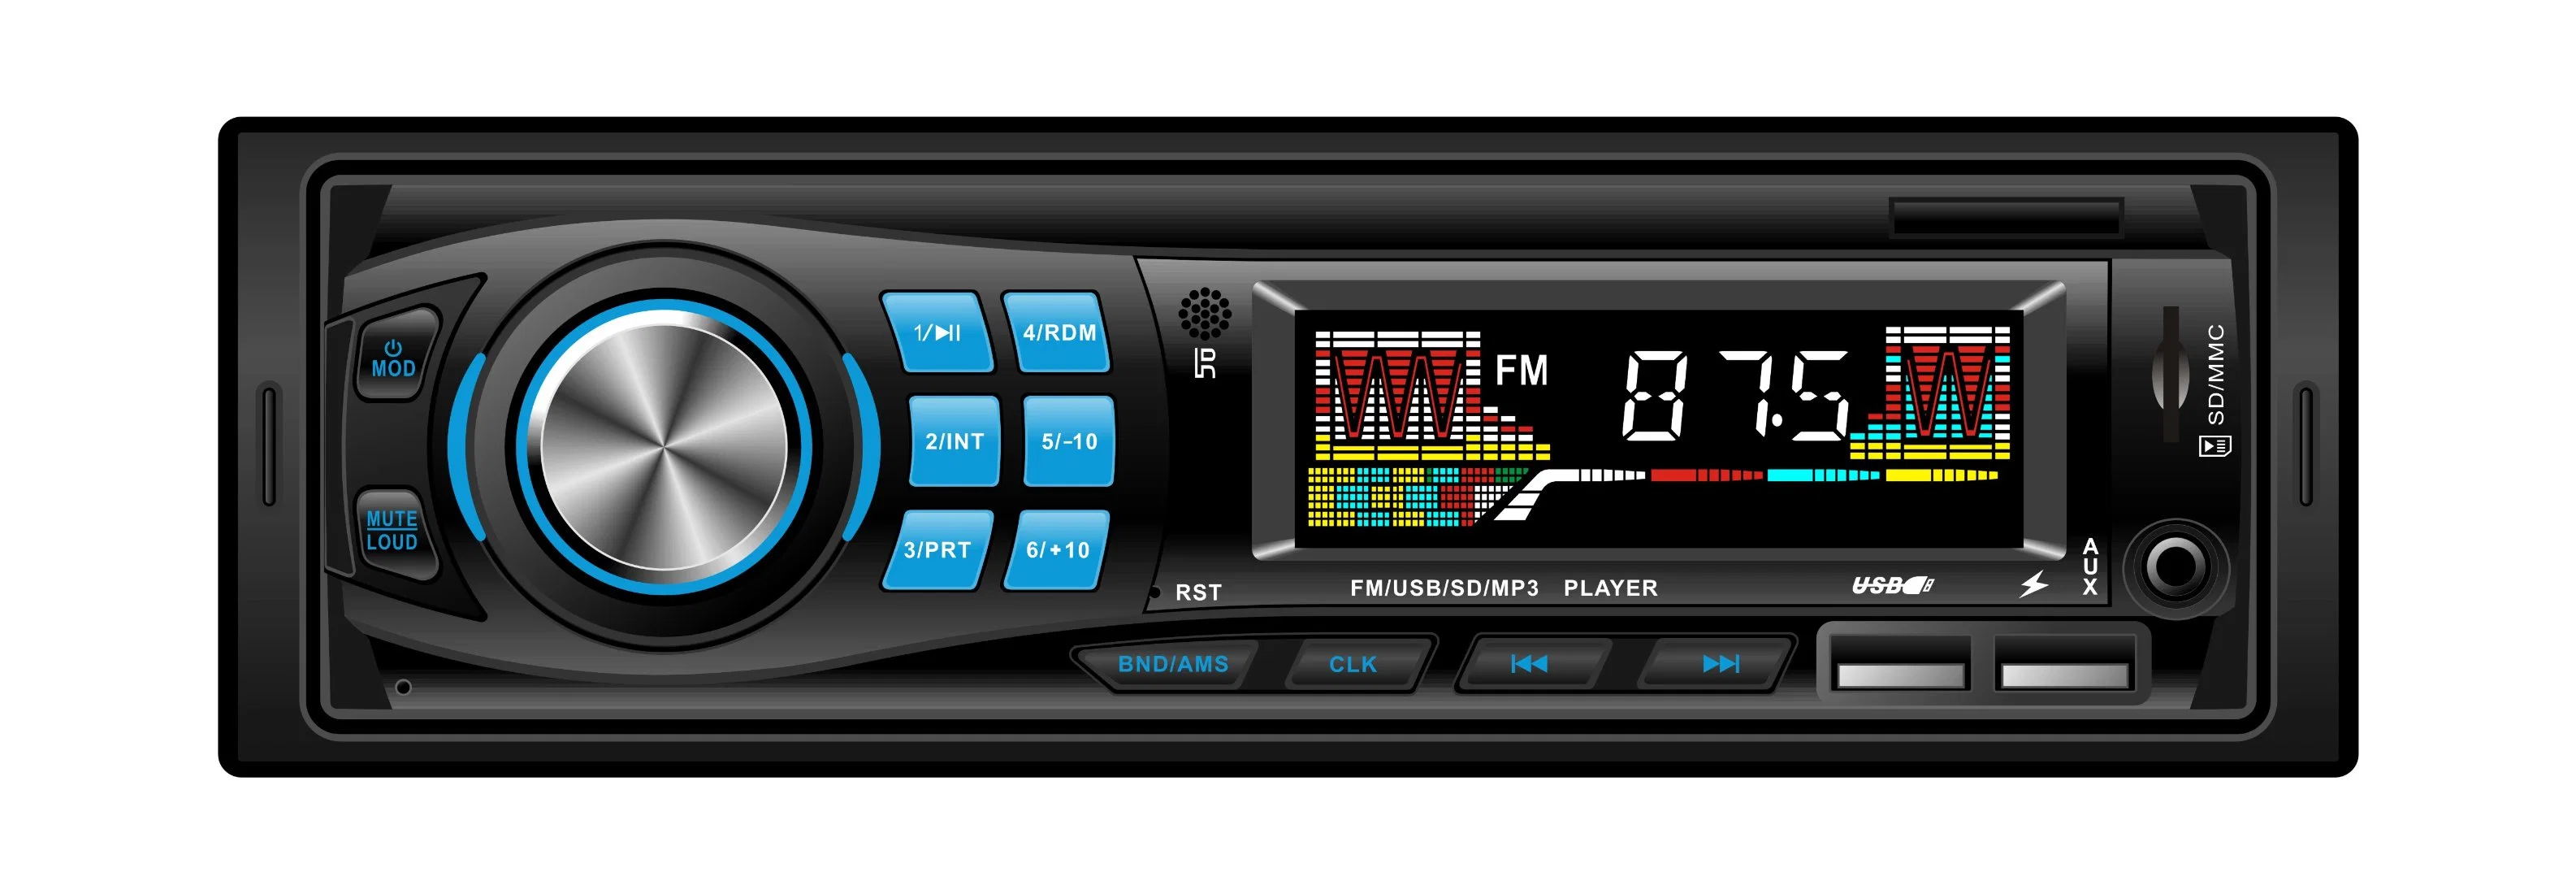 L3013 Car Electrical 1 DIN MP3 Audio MP3 Player System Radio